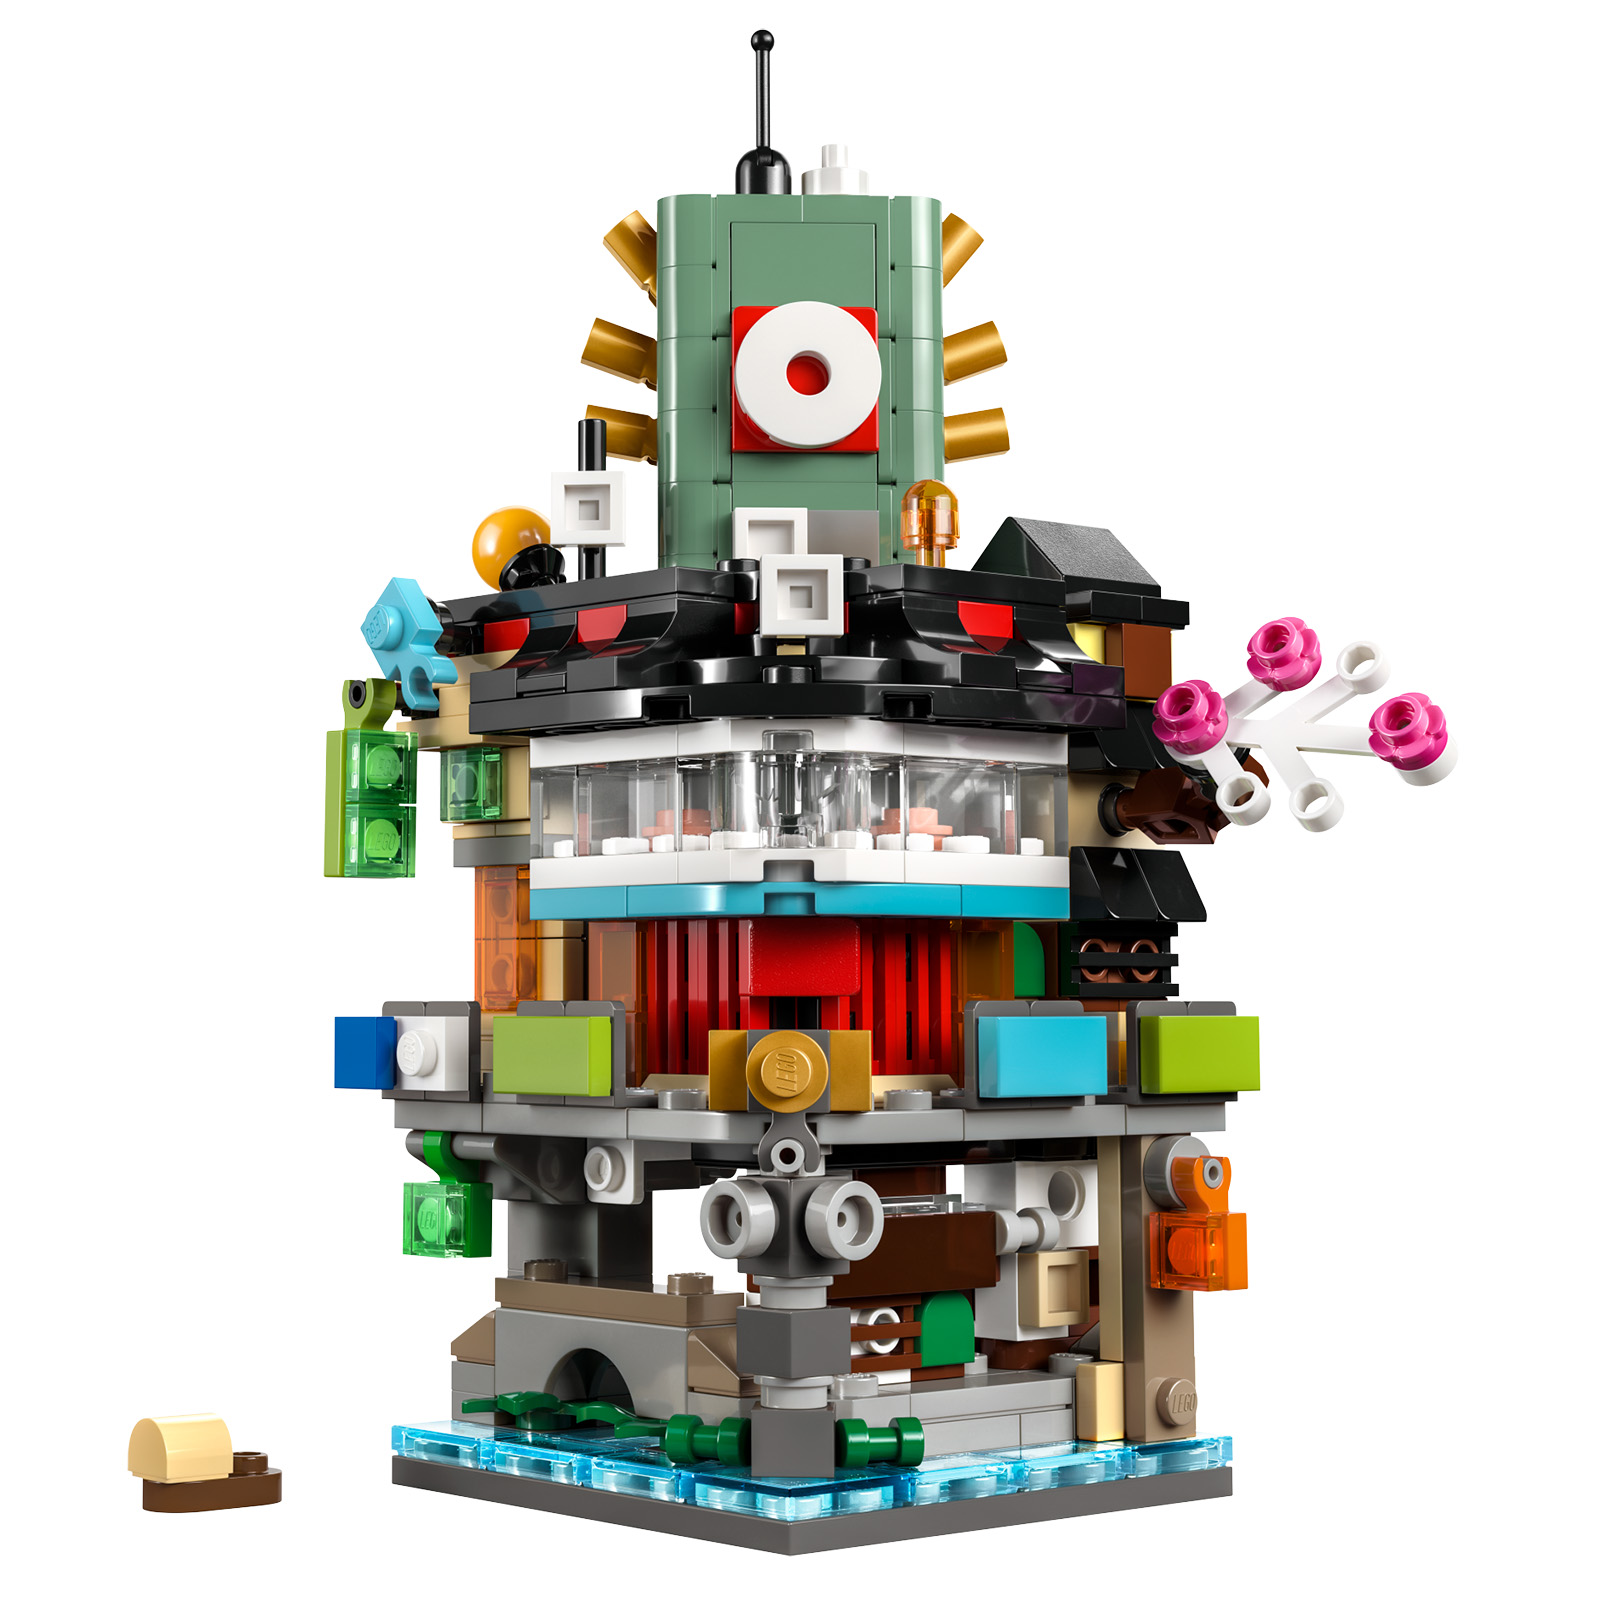 ▻ On the LEGO Shop: the promotional set 40703 Micro NINJAGO City